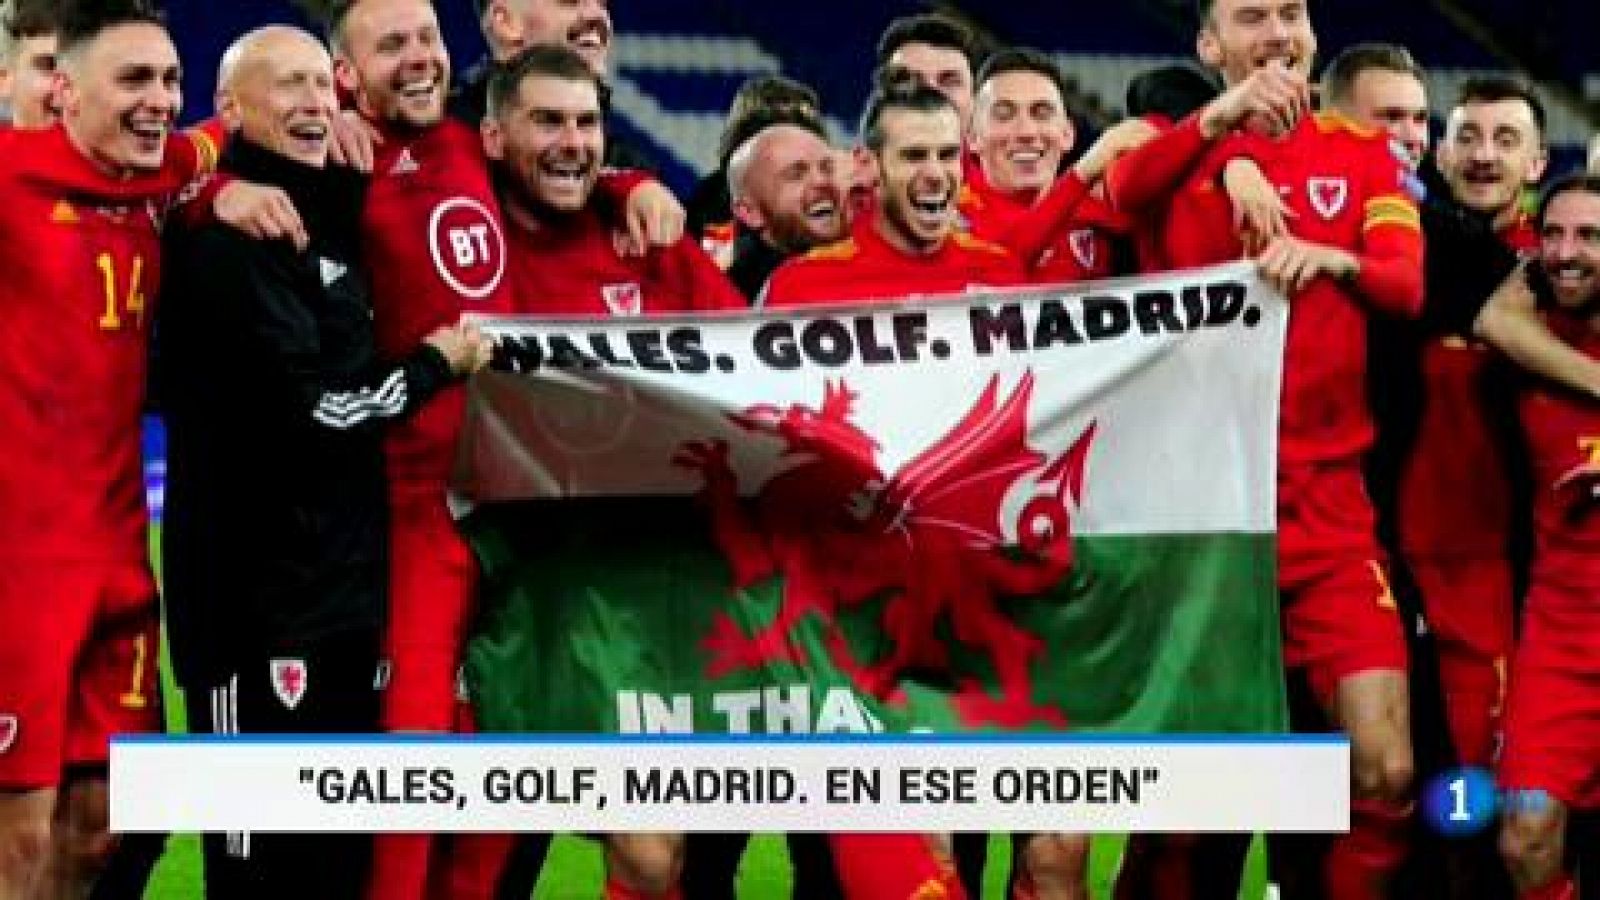 Bale resta importancia a la bandera de "Gales, golf, Madrid"